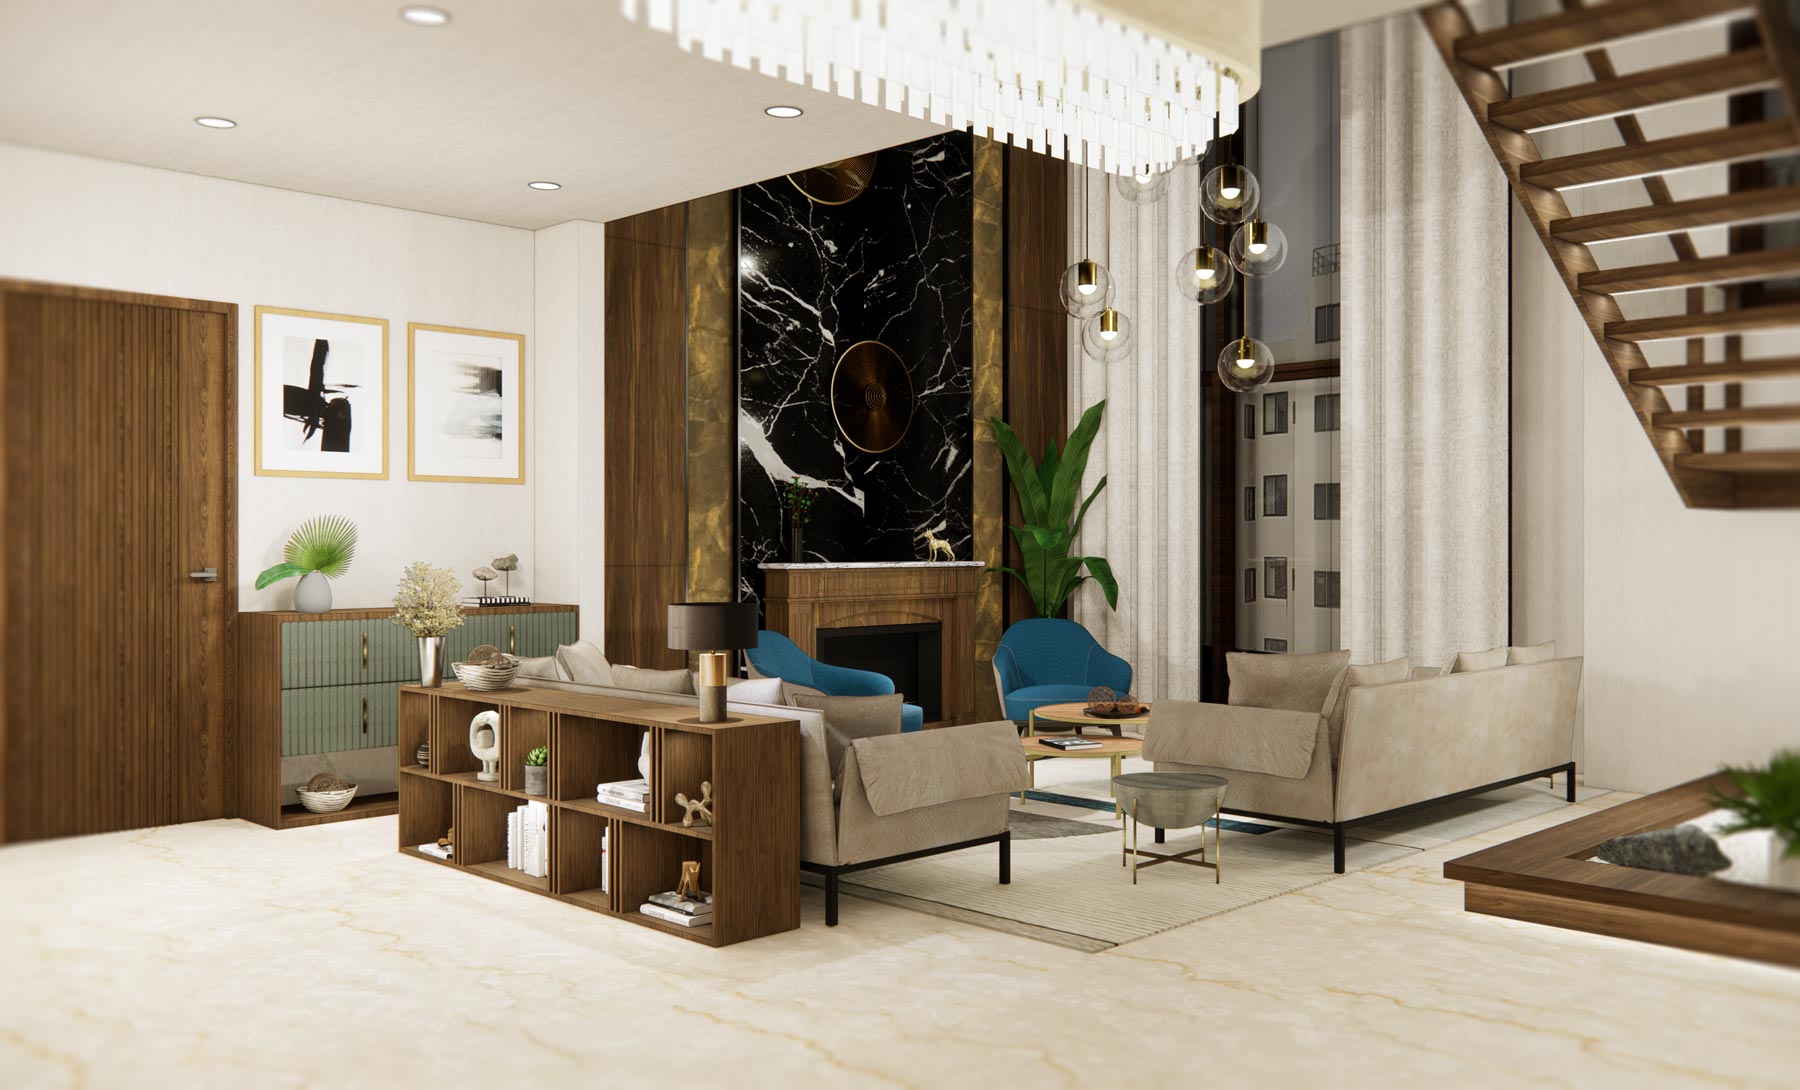 Kyrah Design, Living Room, Duplex Interior Design